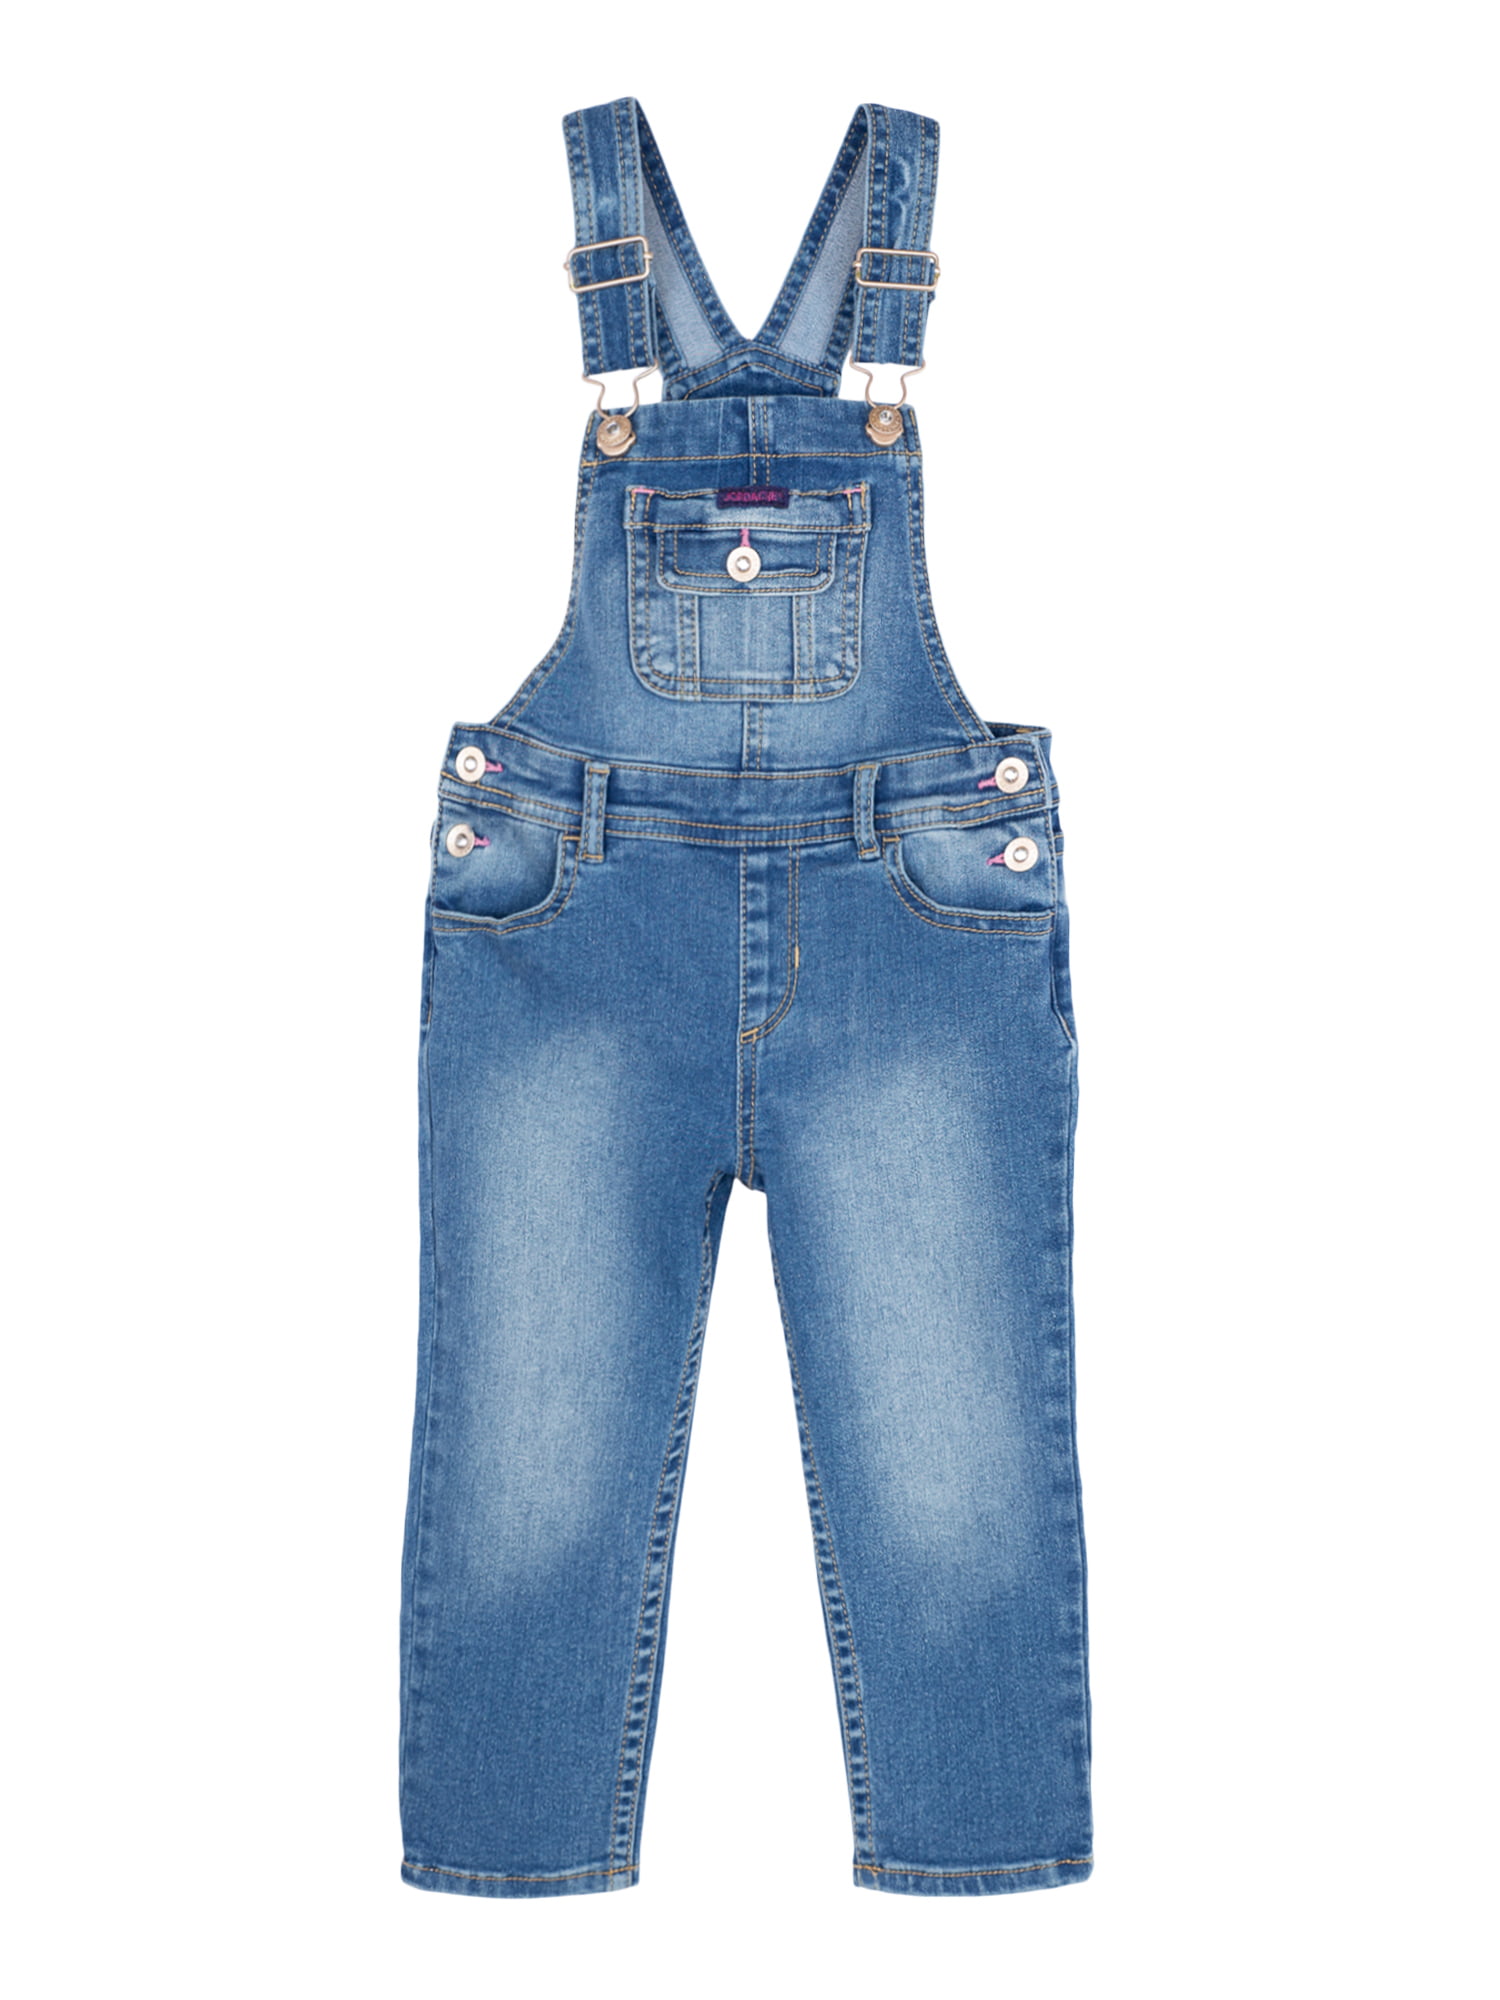 girls blue jean overalls